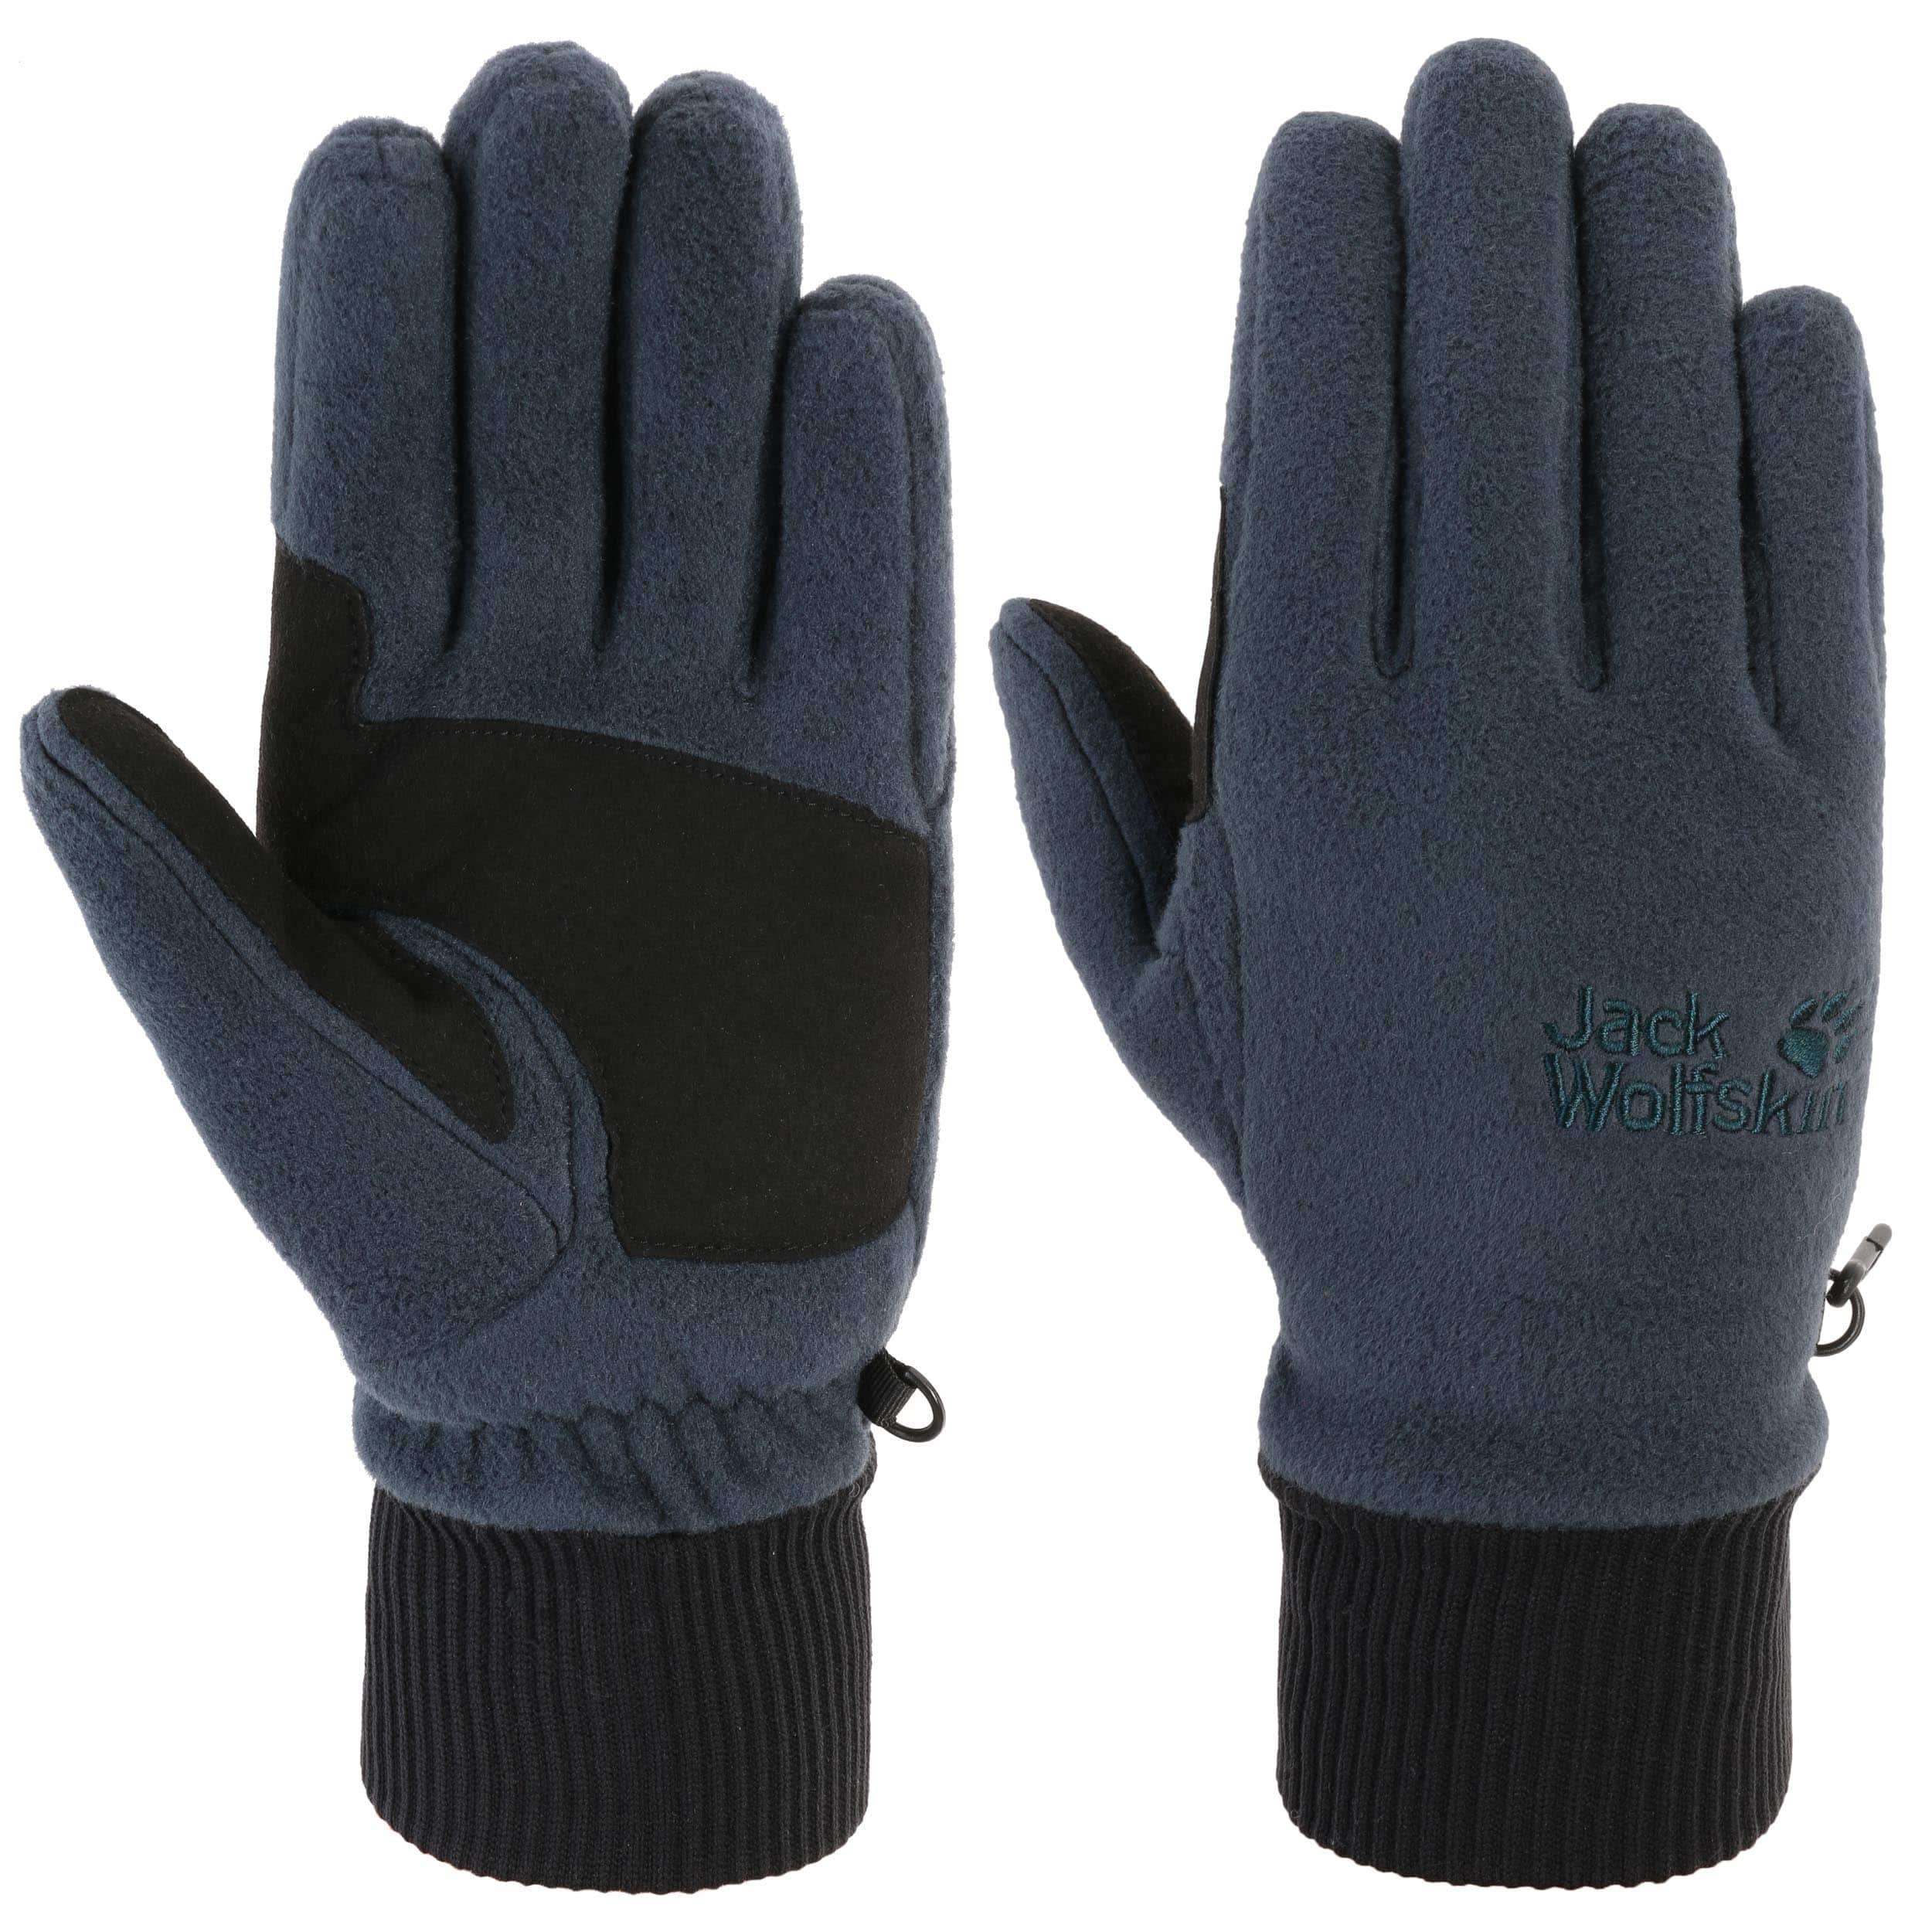 Wolfskin Jack - 37,95 € Fleece Vertigo Gloves by